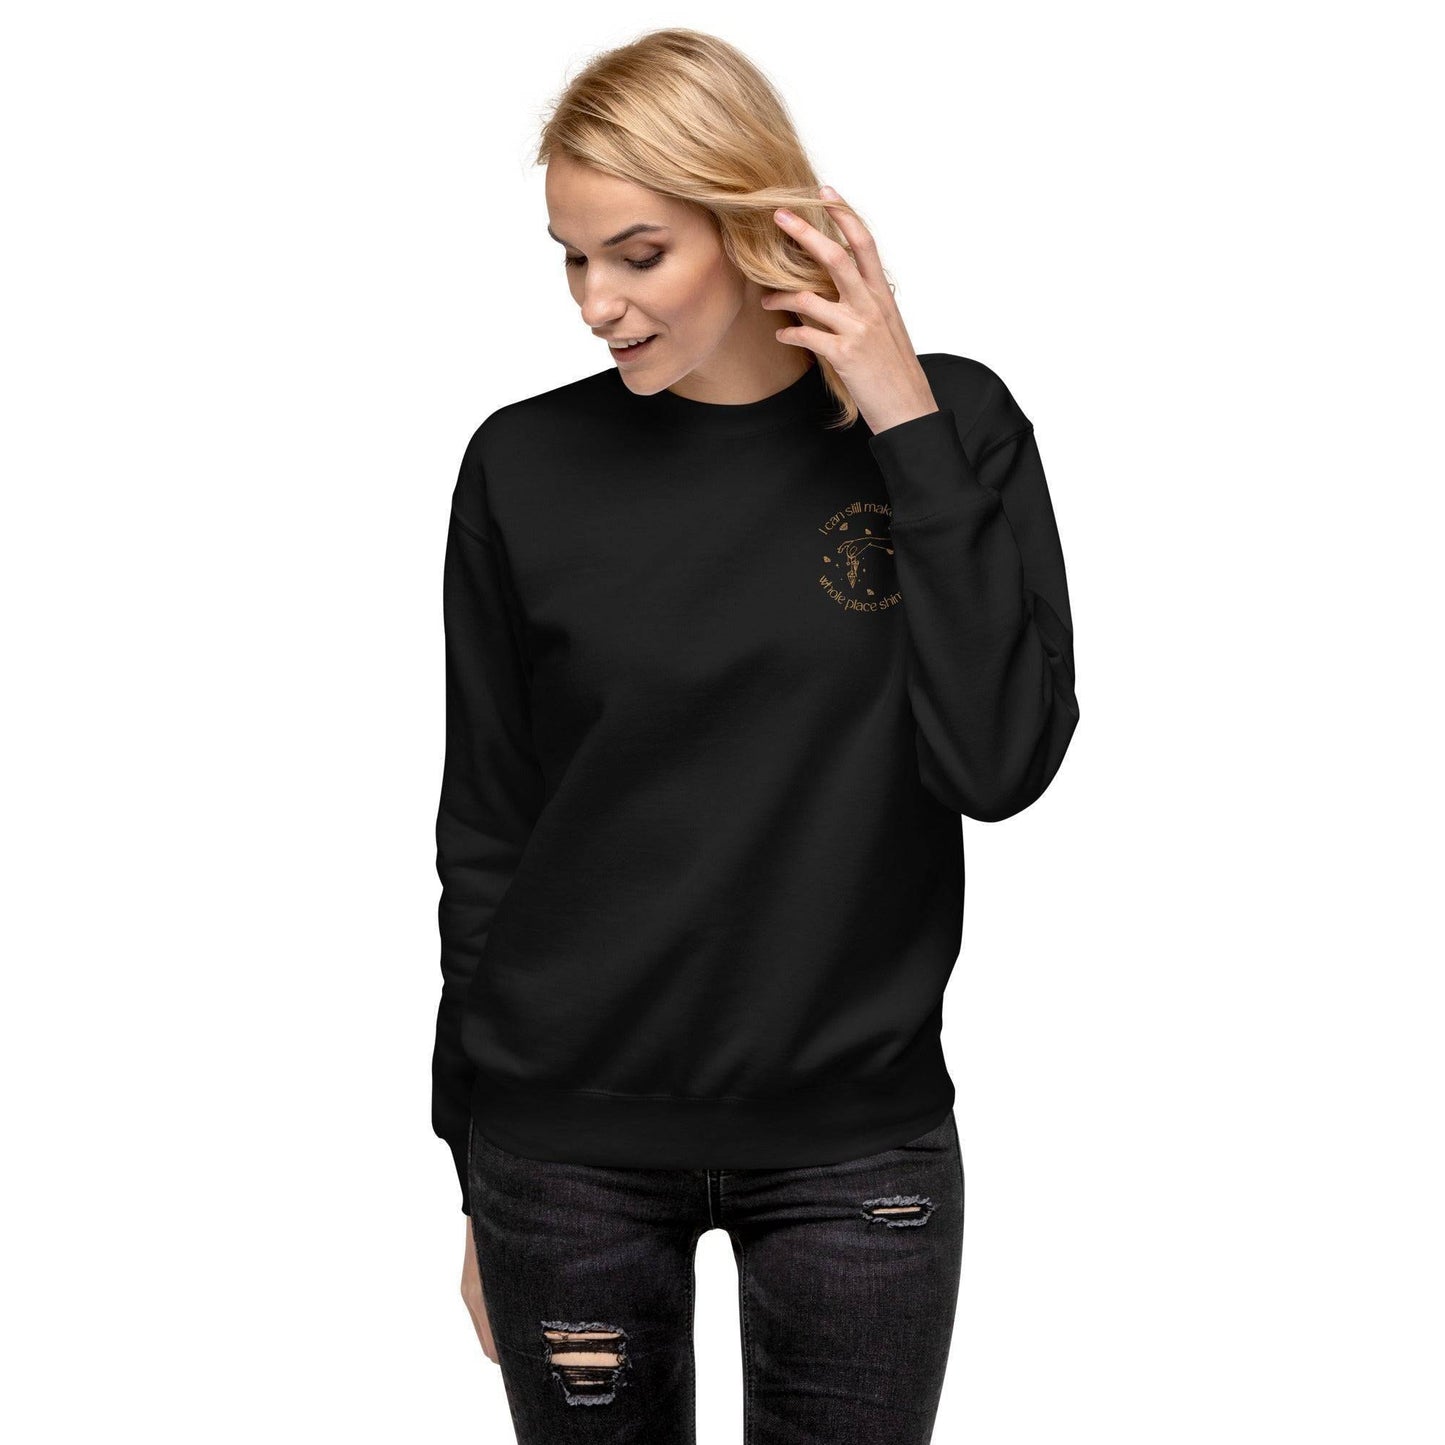 Taylor Swift Bejeweled Embroidered Sweatshirt Black